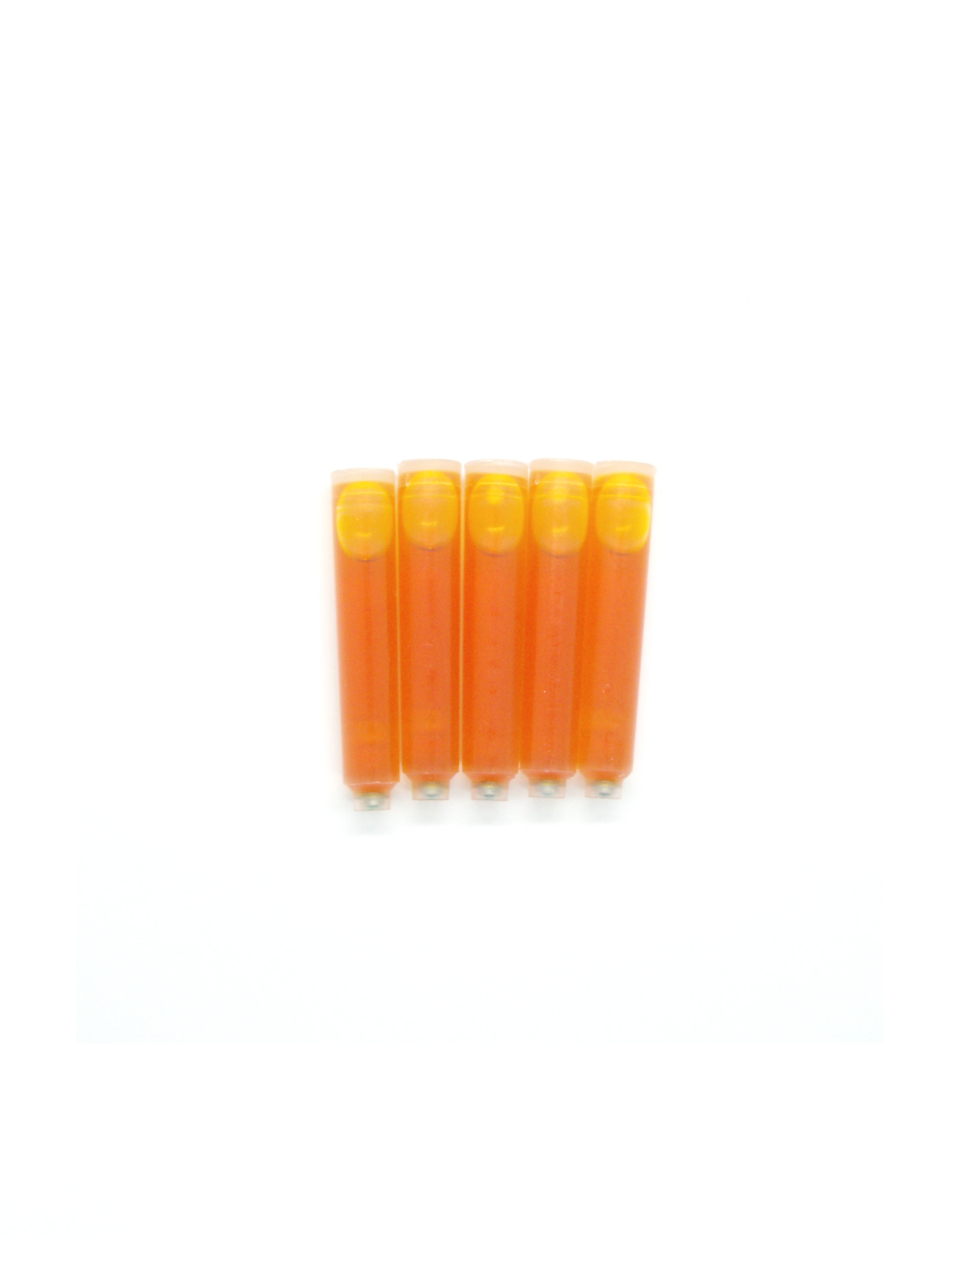 PenConverter Ink Cartridges For Padrino Fountain Pens (Yellow)